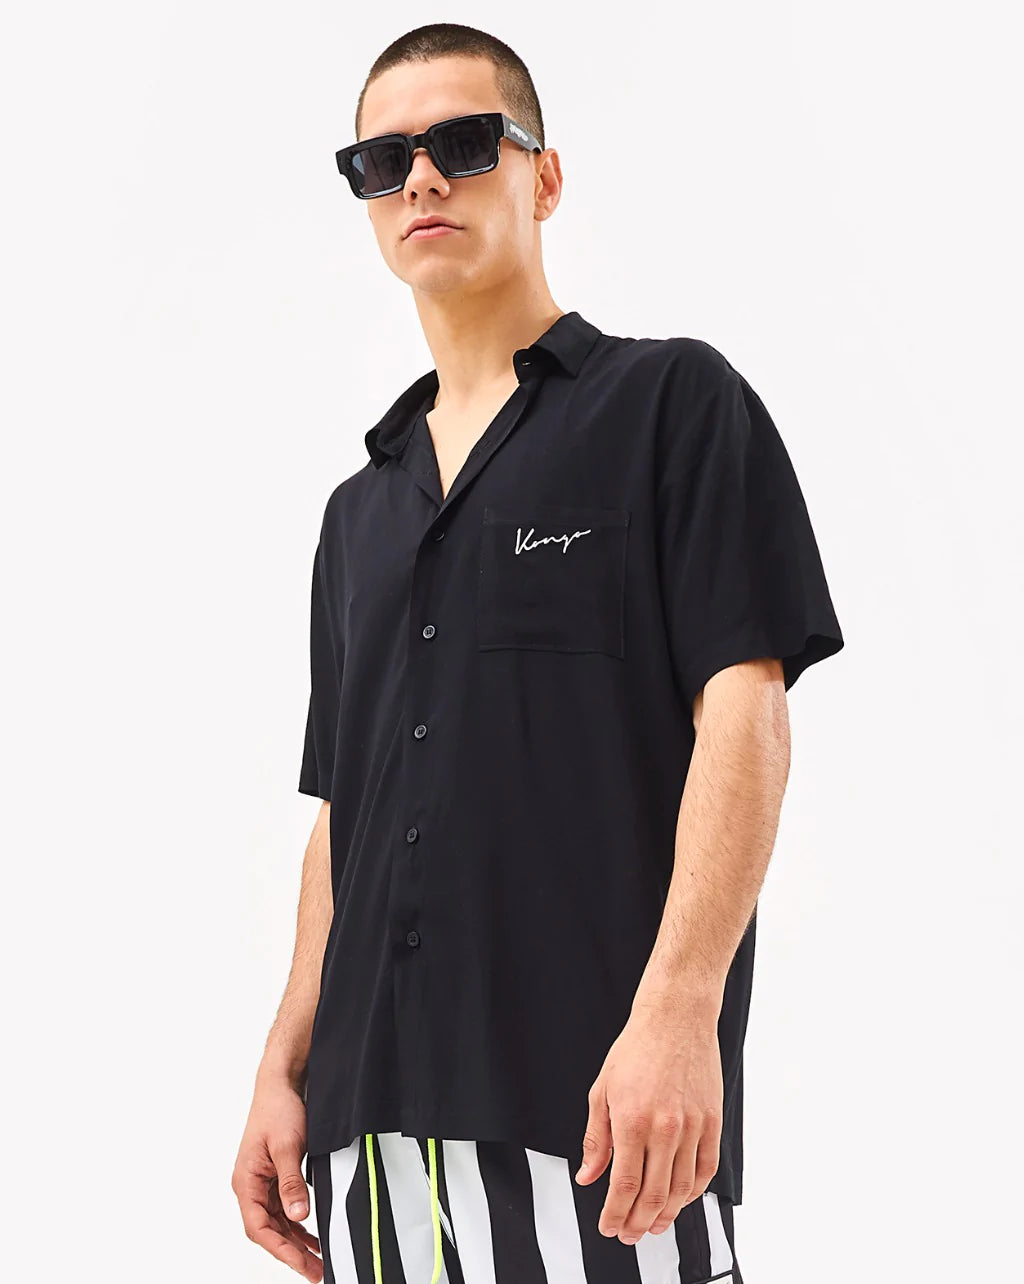 Lightweight half Sleeve Milan Black Shirt with one Pocket - gender neutral